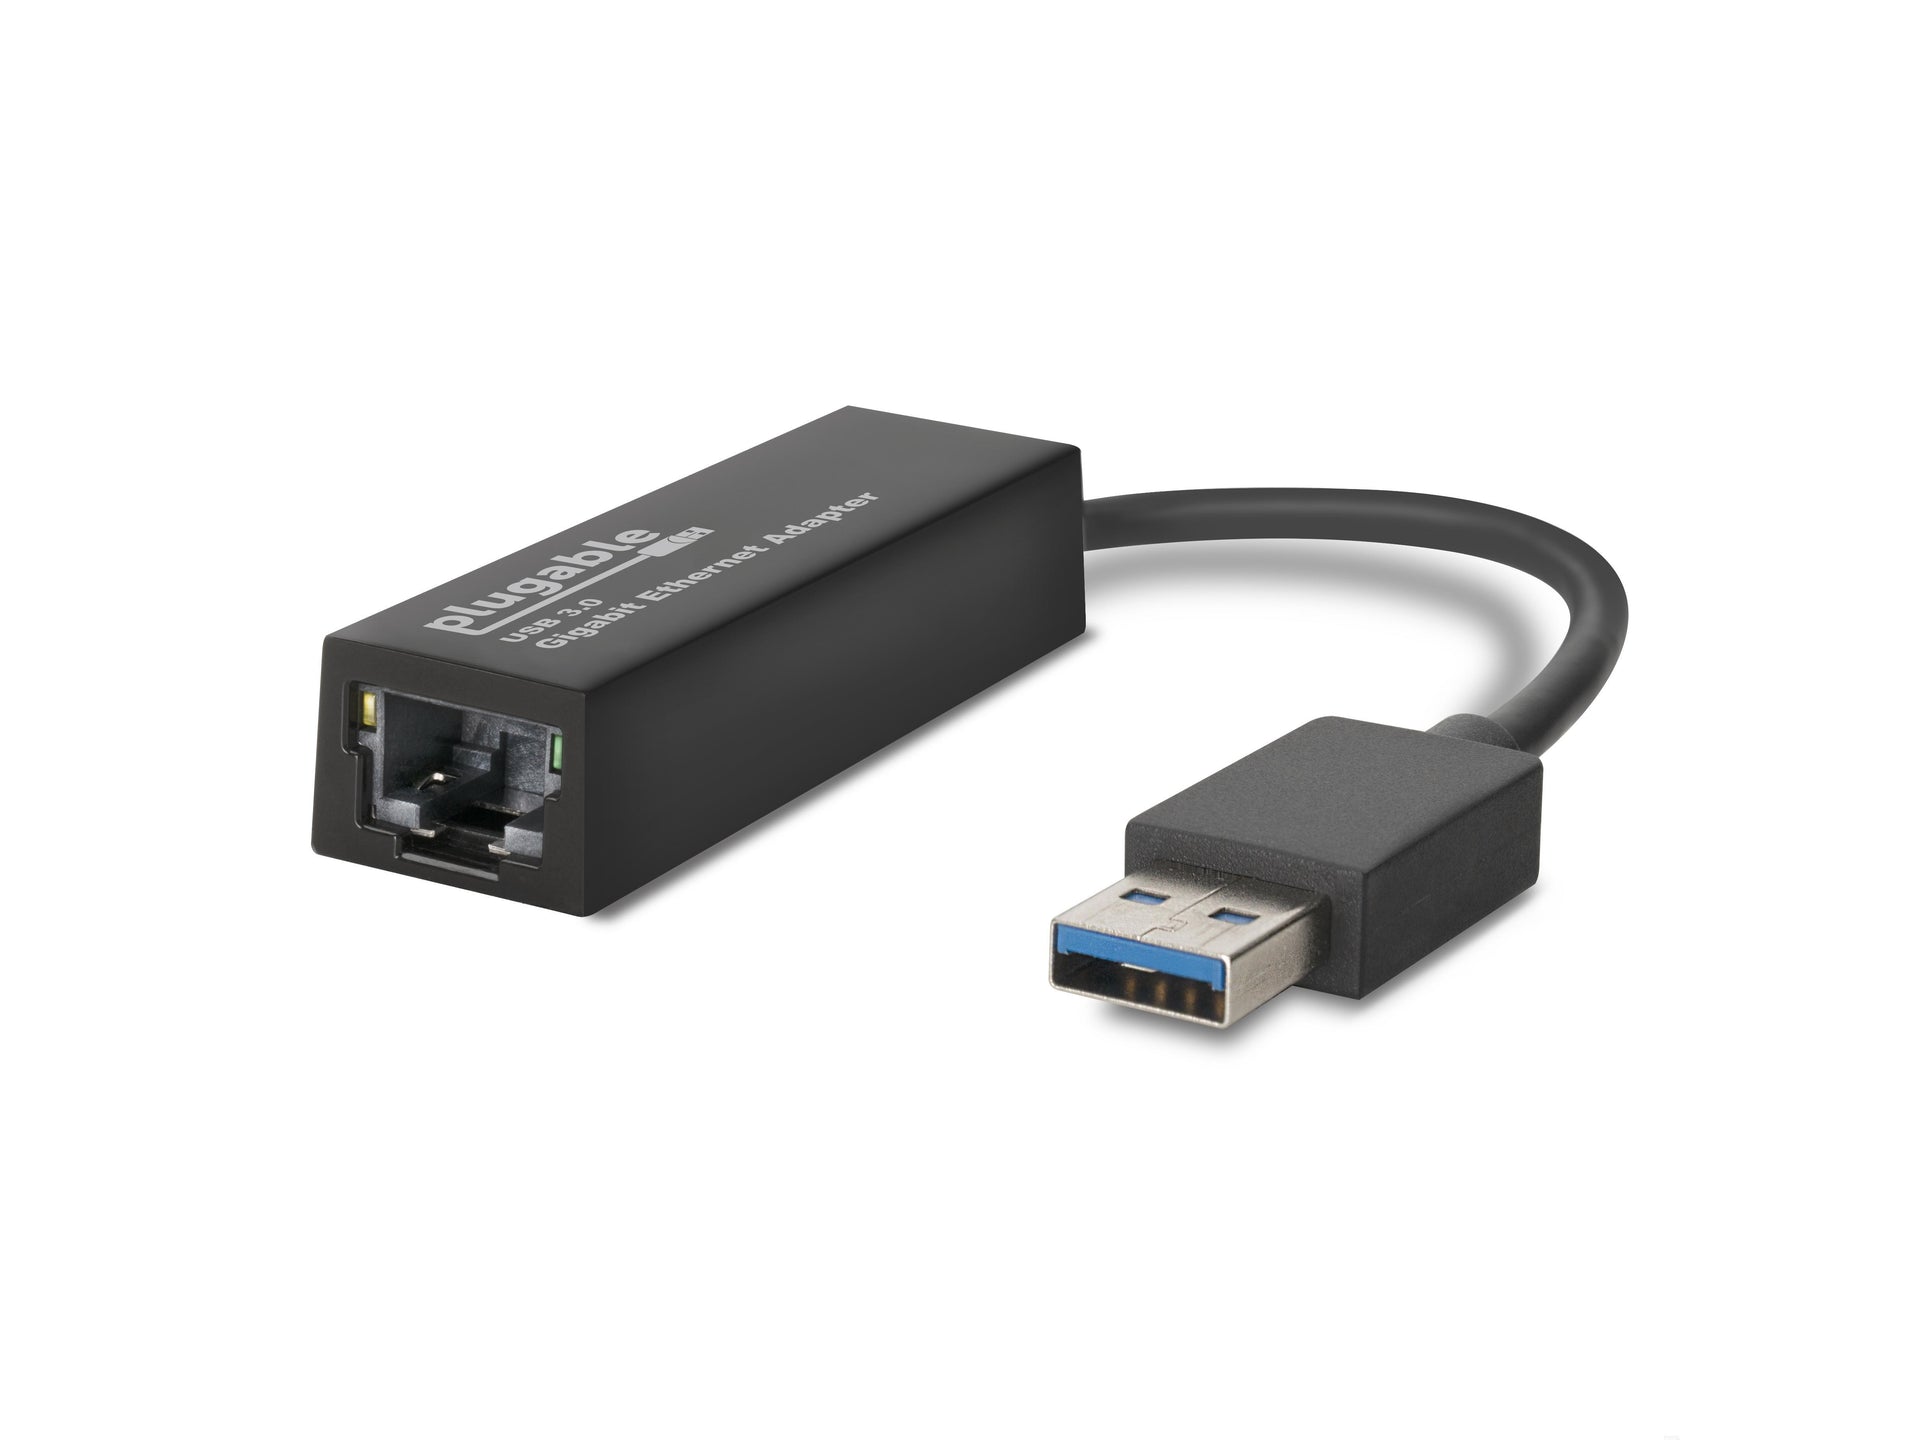 Plugable USB 3.0 Gigabit Adapter – Plugable Technologies